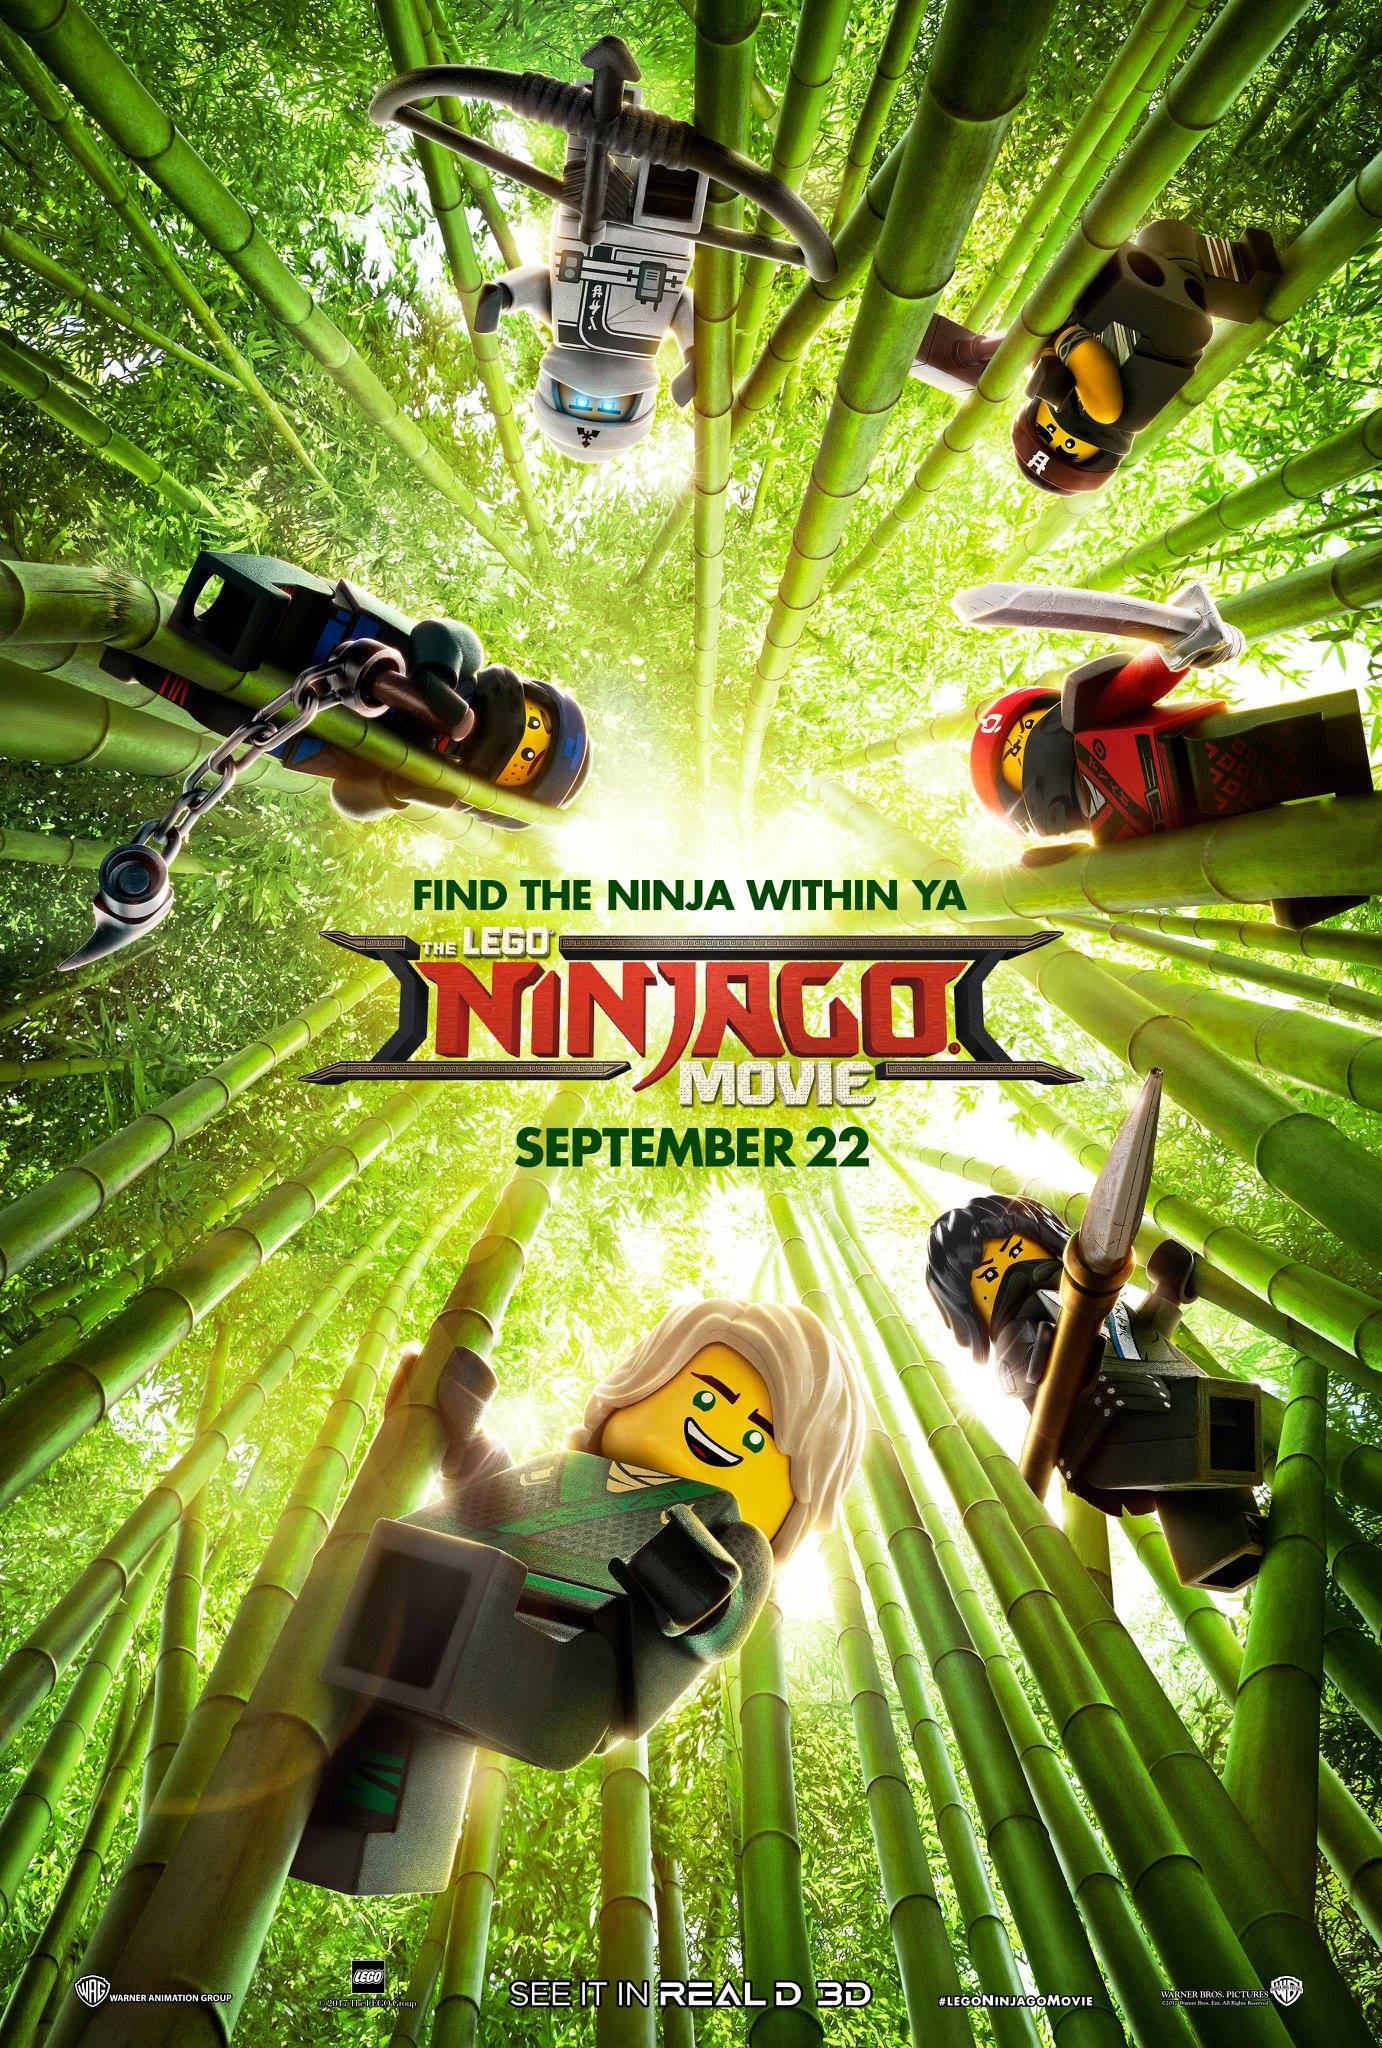 Amazon Prices The LEGO NINJAGO Movie Digital HD For $10 - FBTB